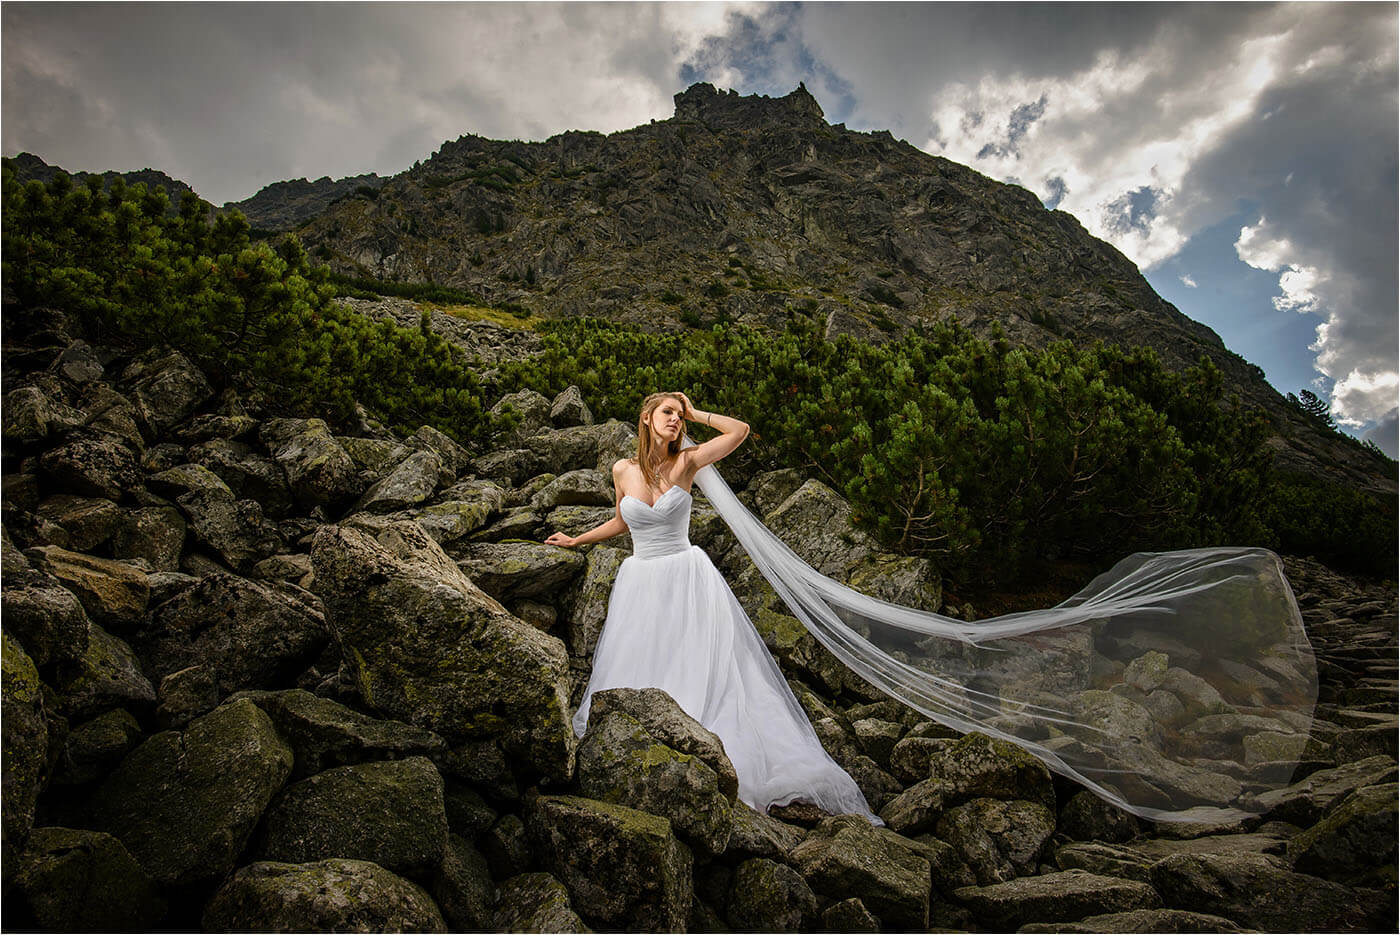 Destination Wedding Photoshoot in Slovakia